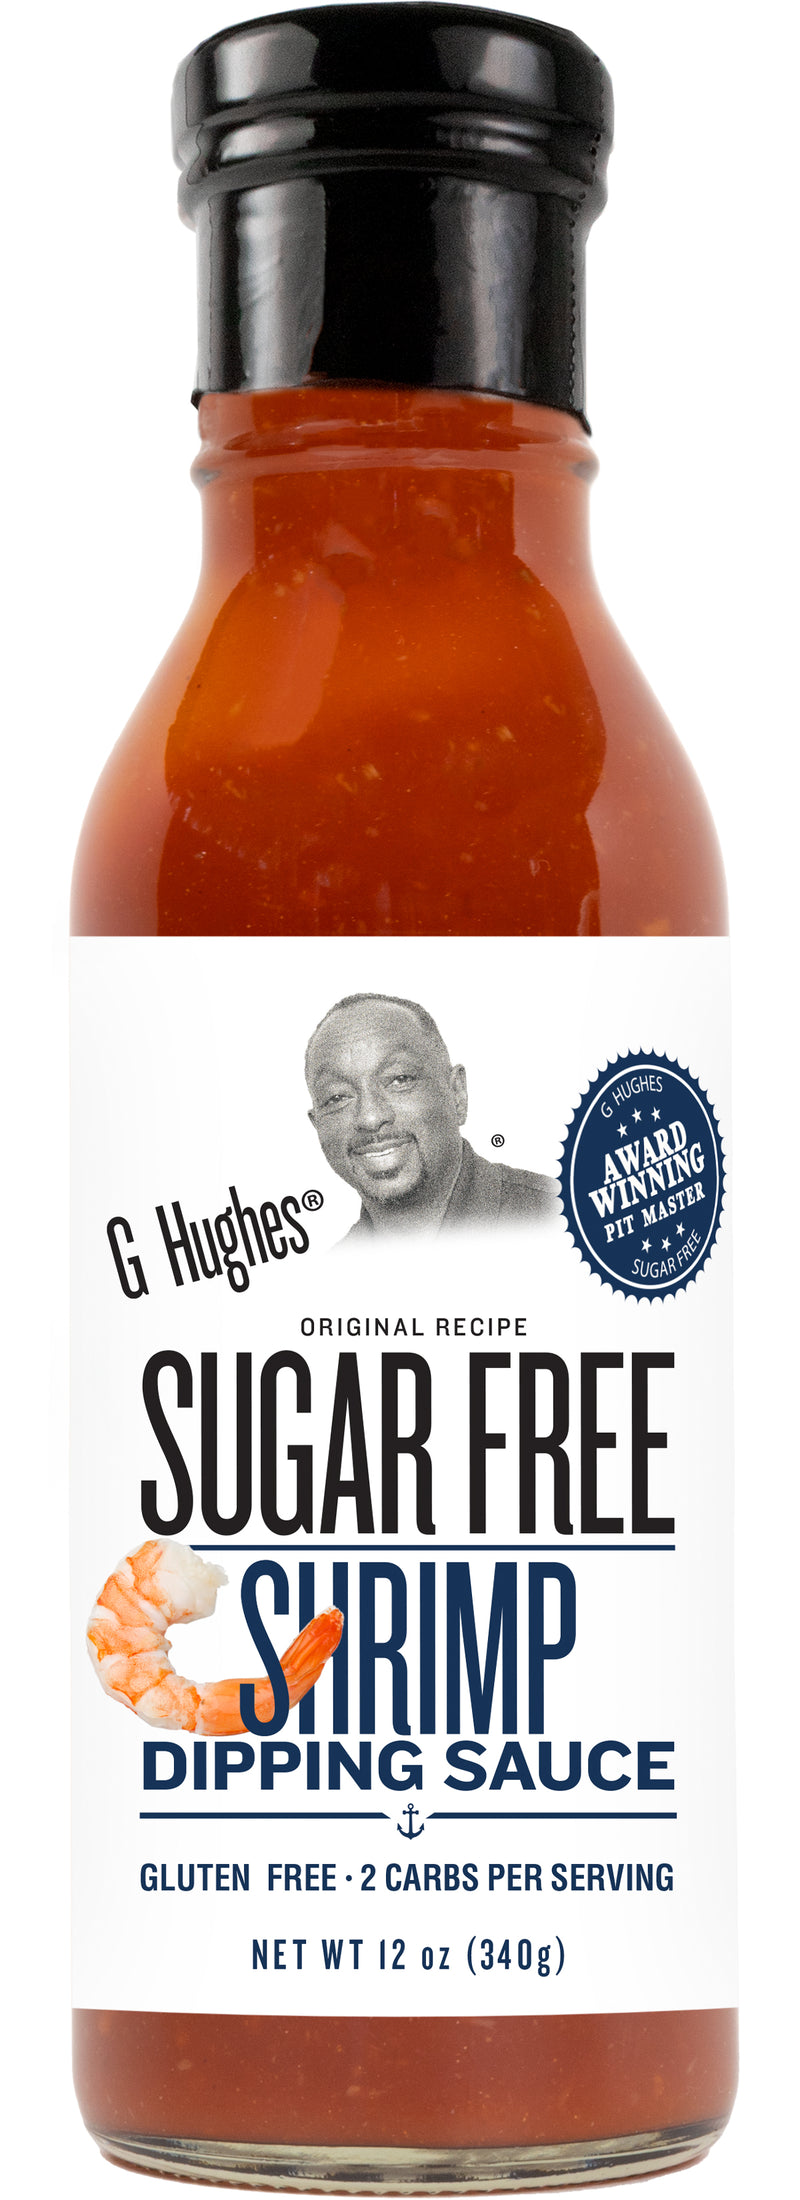 G. Hughes Smokehouse Sugar Free Shrimp Dipping Sauce (12 oz) 